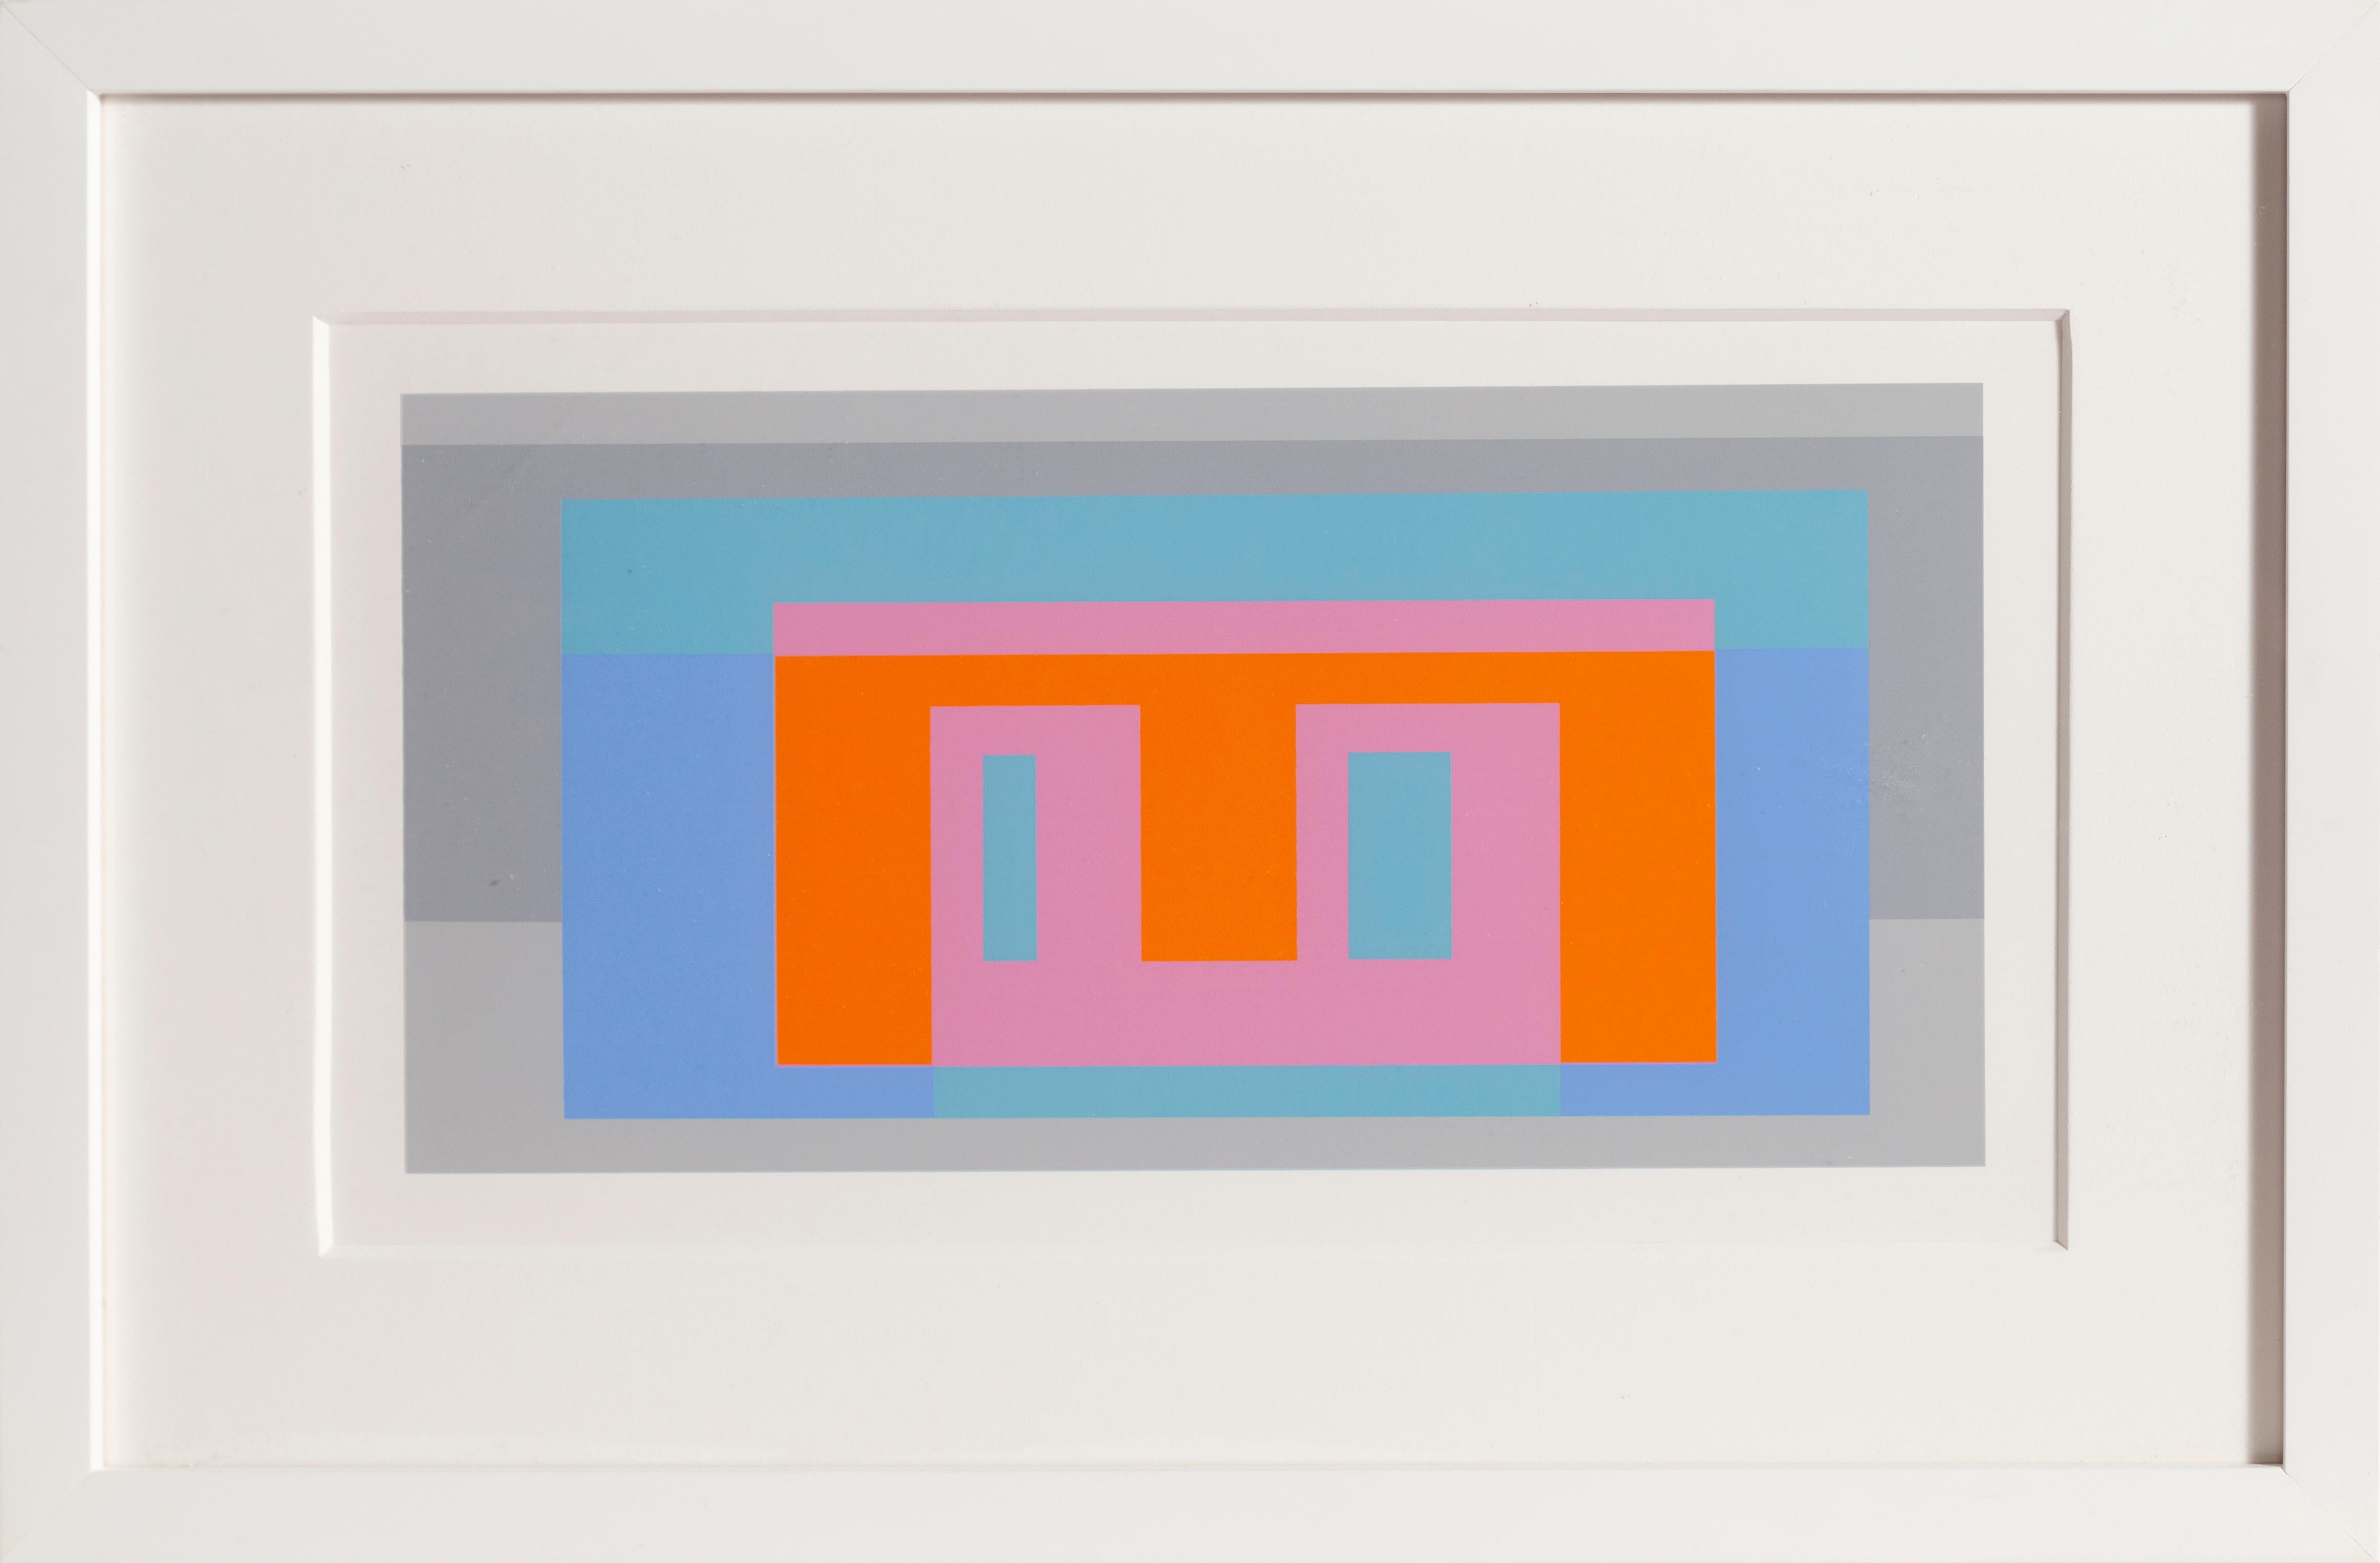 Variant - P1, F17, I1, Abstract Geometric Screenprint by Josef Albers